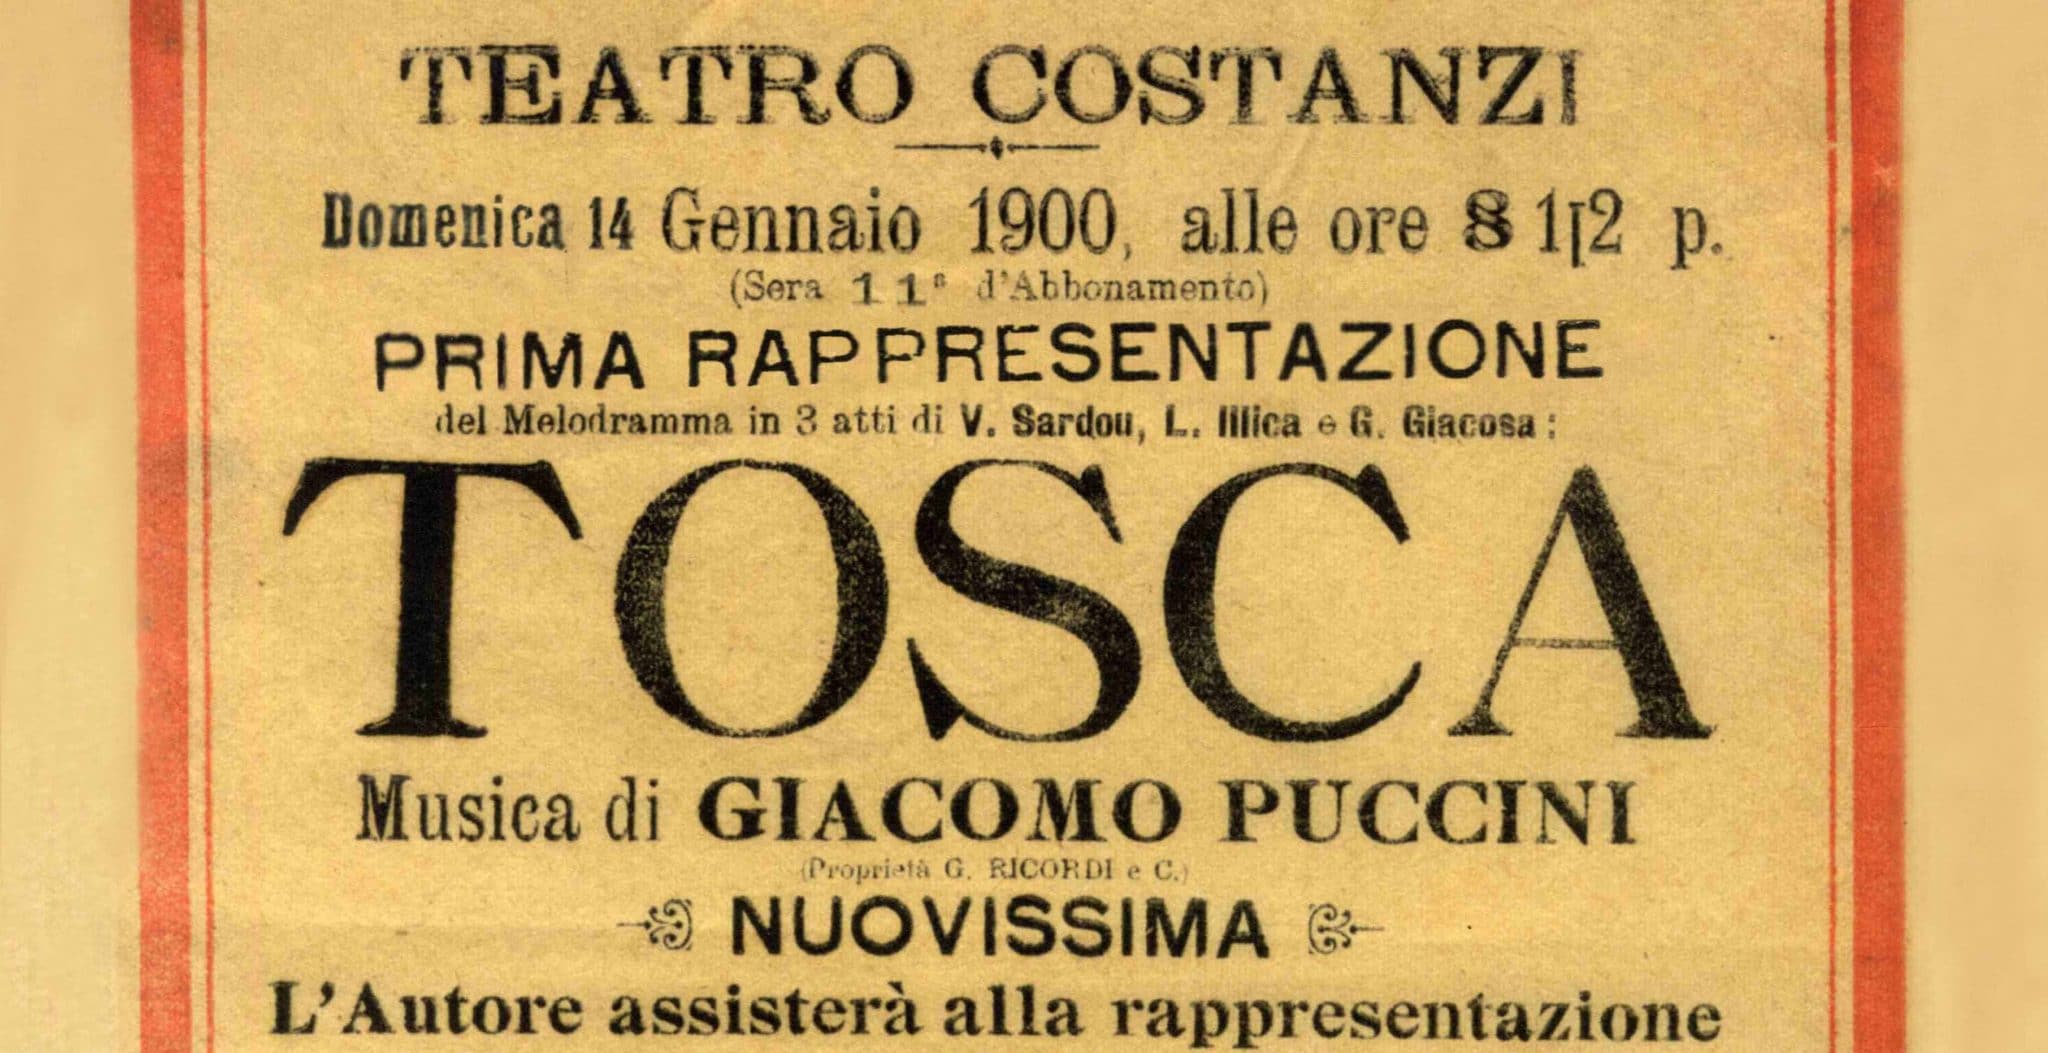 1899-00 Teatro Costanzi